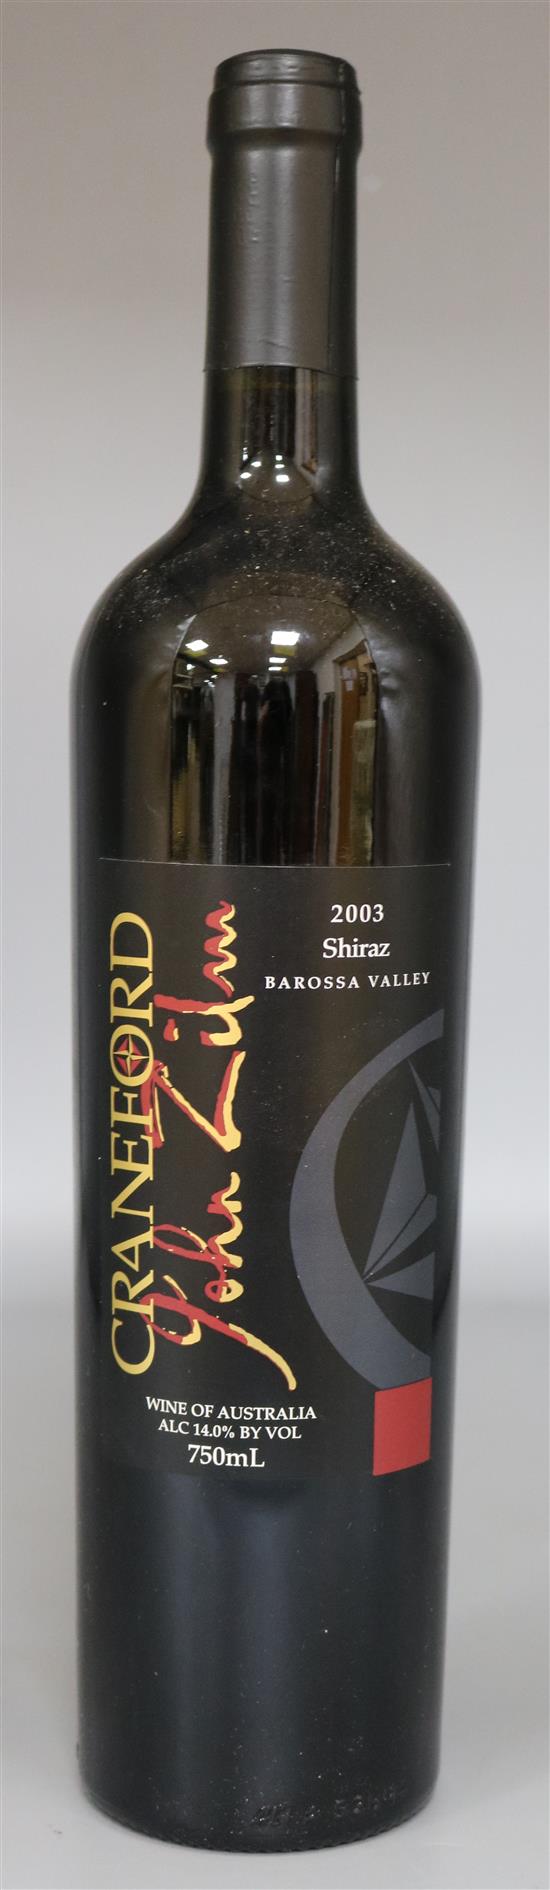 Eleven bottles of Craneford Barosa Valley Shiraz 2003.